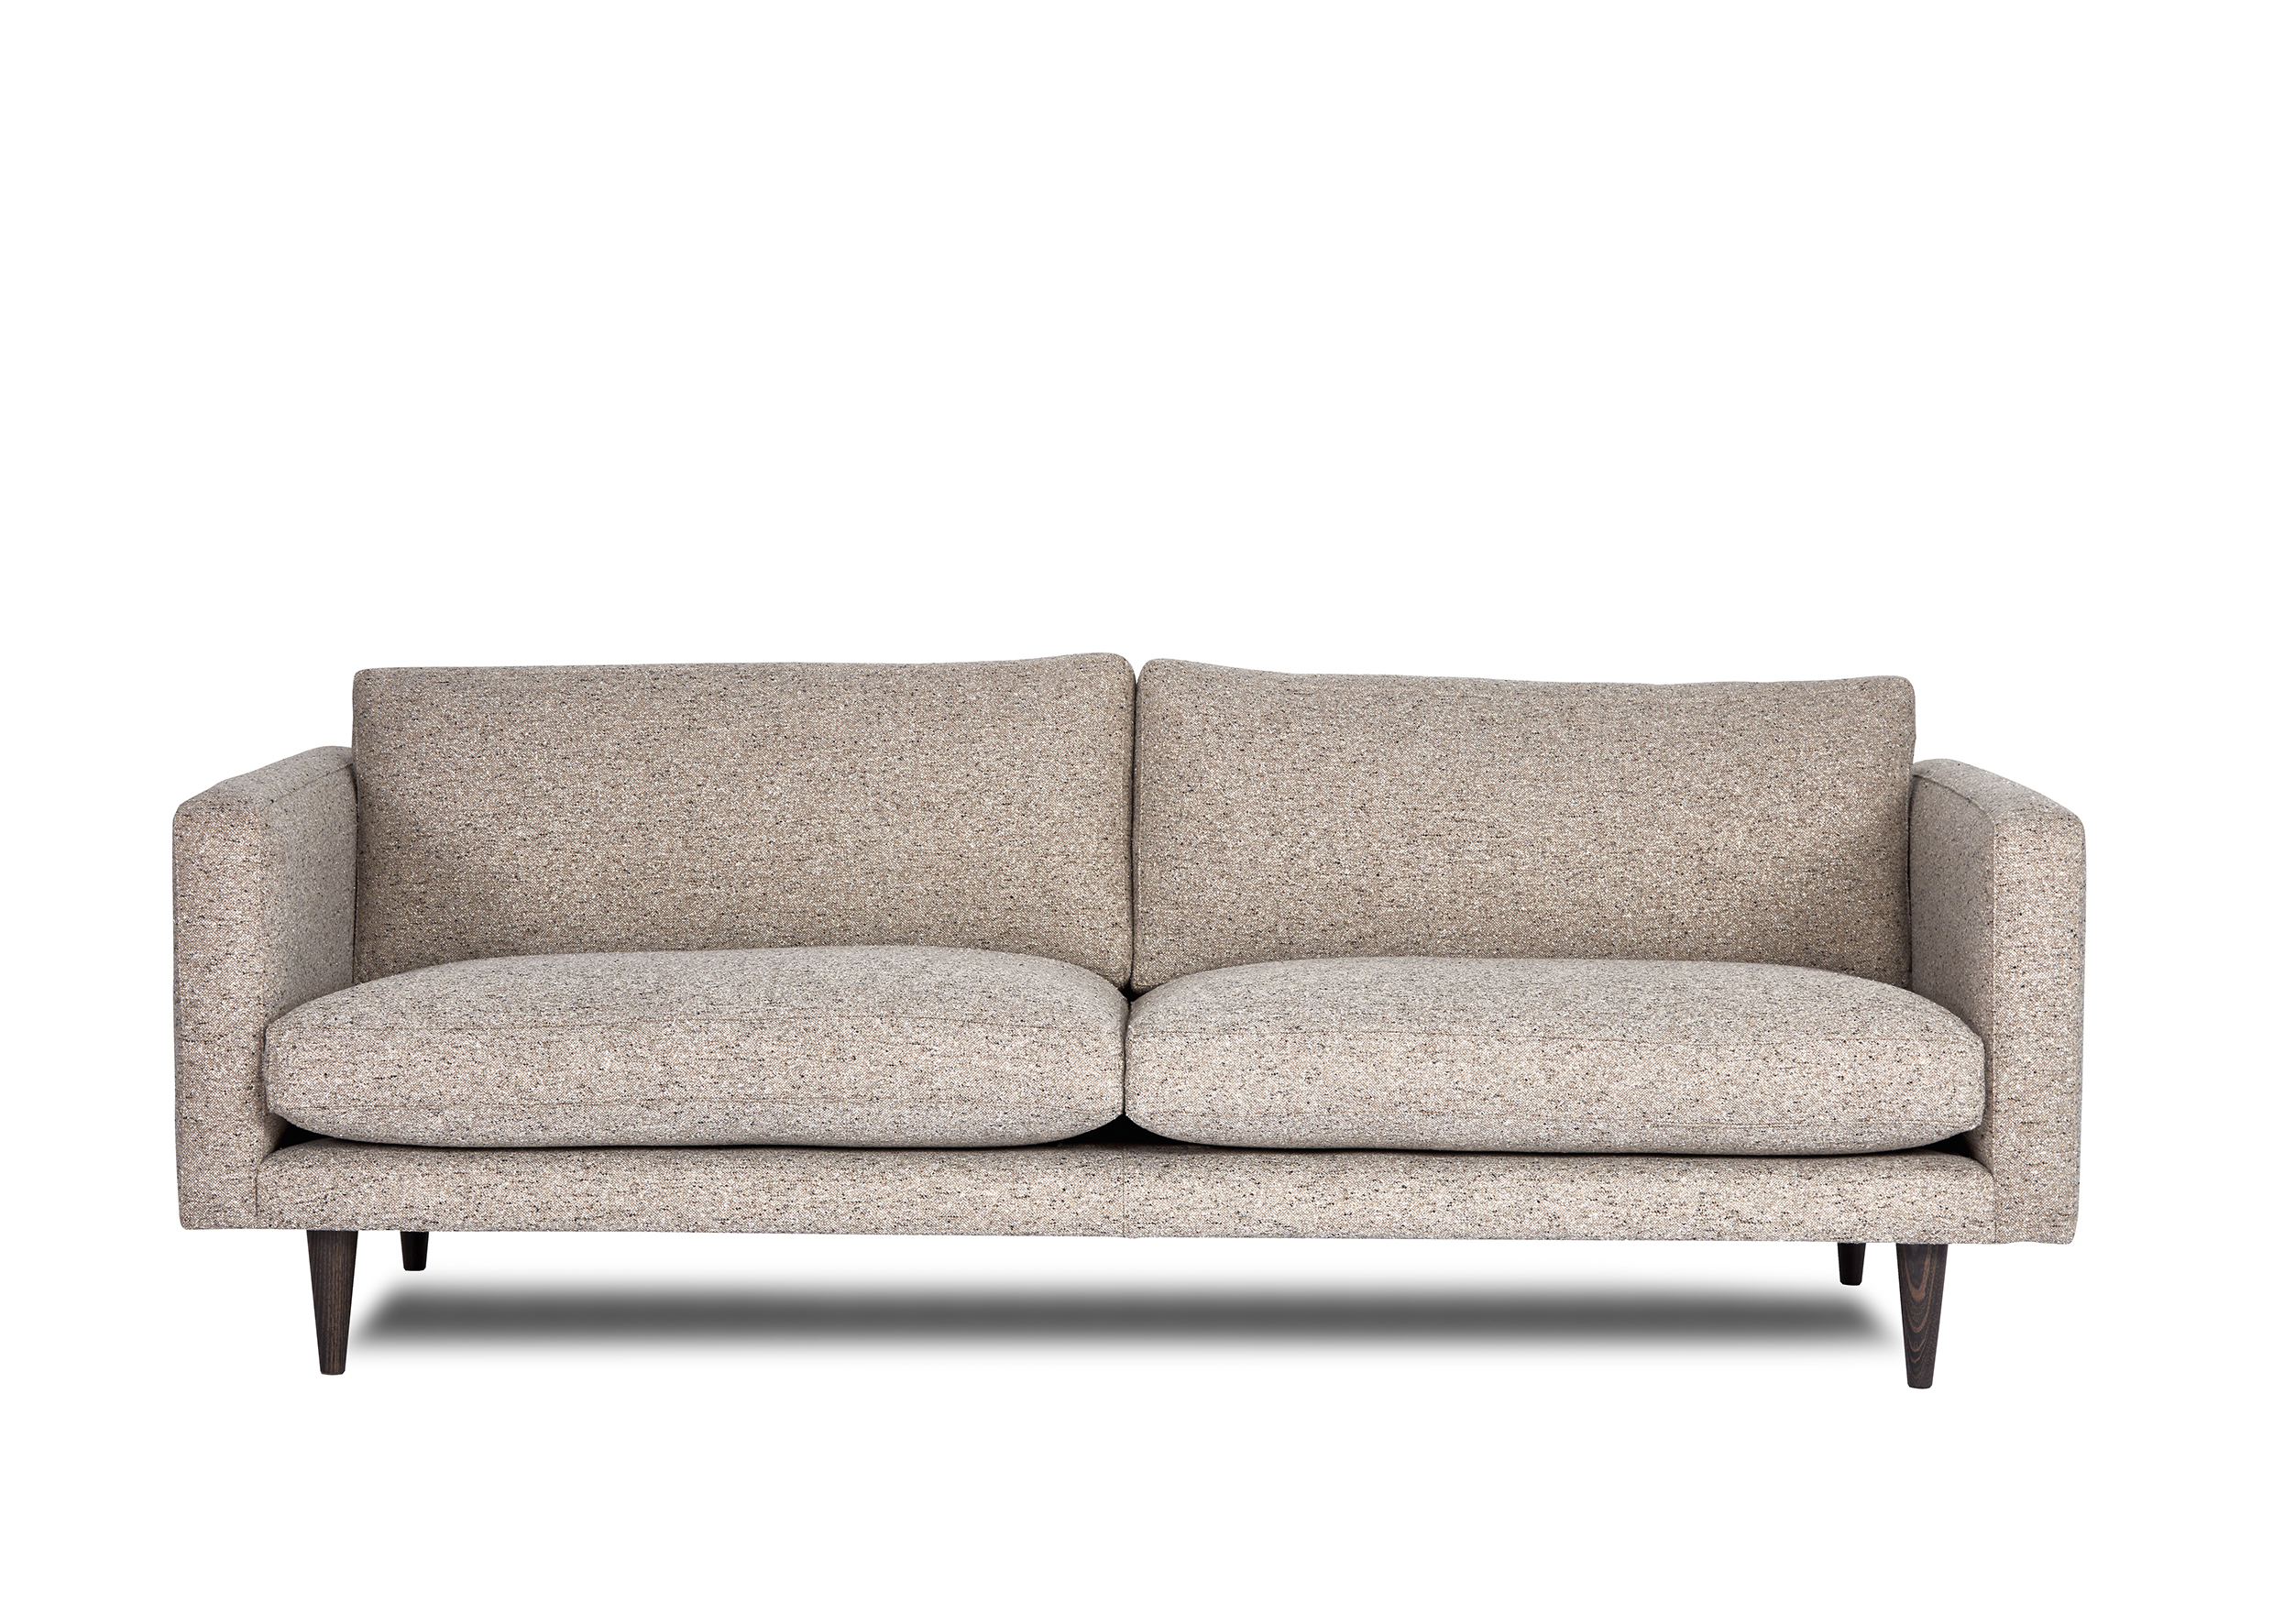 Arthur G's BelAir Sofa